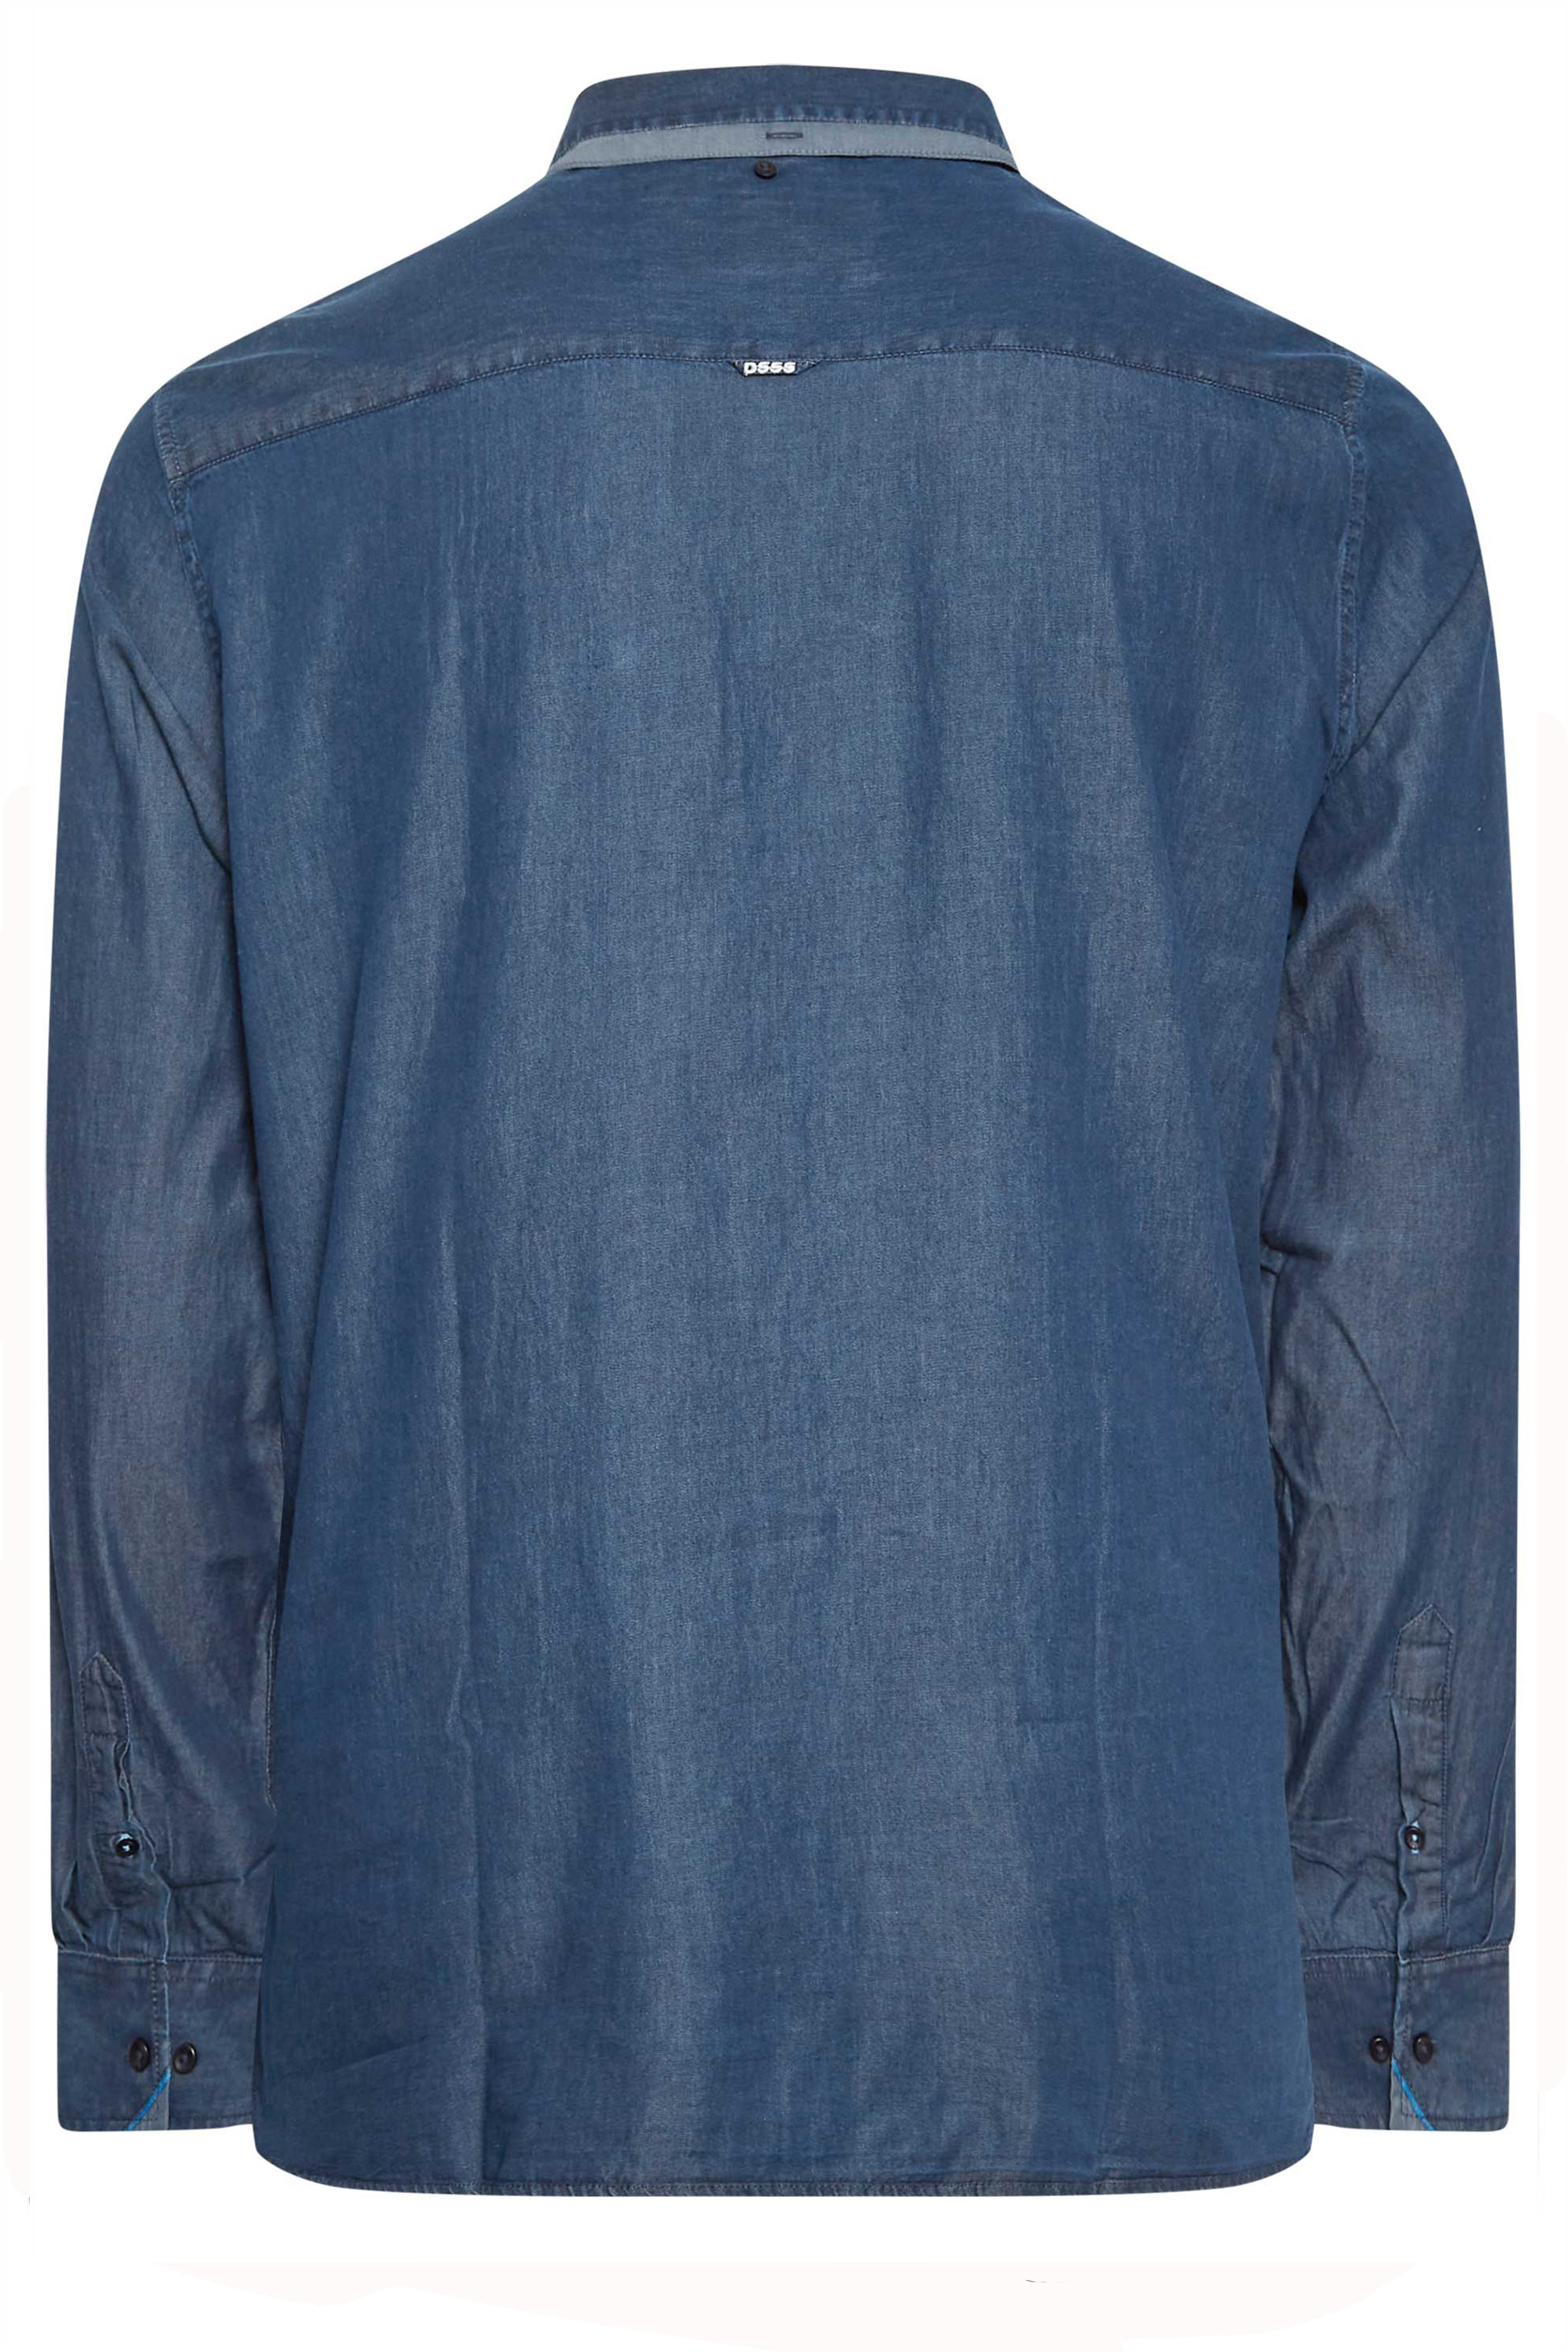 D555 Big & Tall Navy Blue Denim Shirt | BadRhino  2